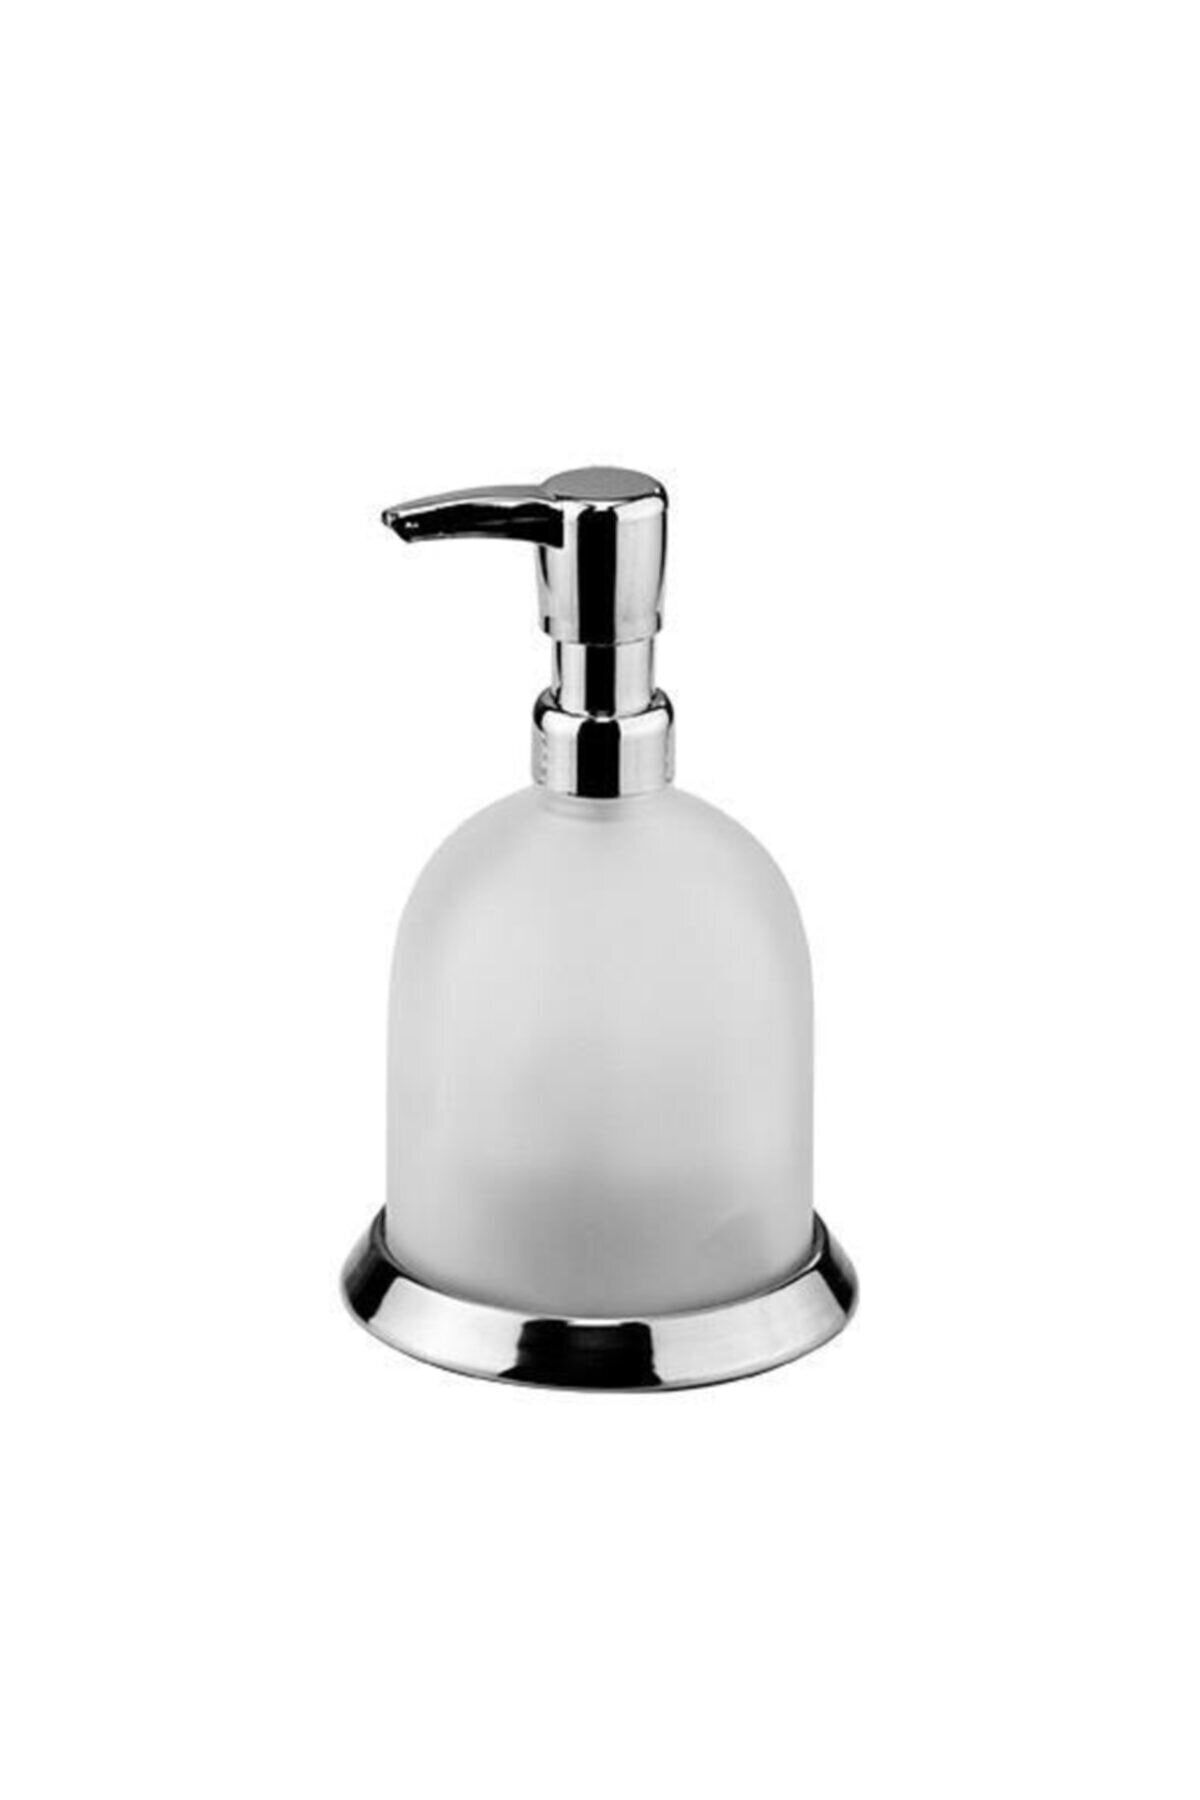 Tema Banyo Dali Sıvı Sabunluk Cam Krom Dispenser 81209